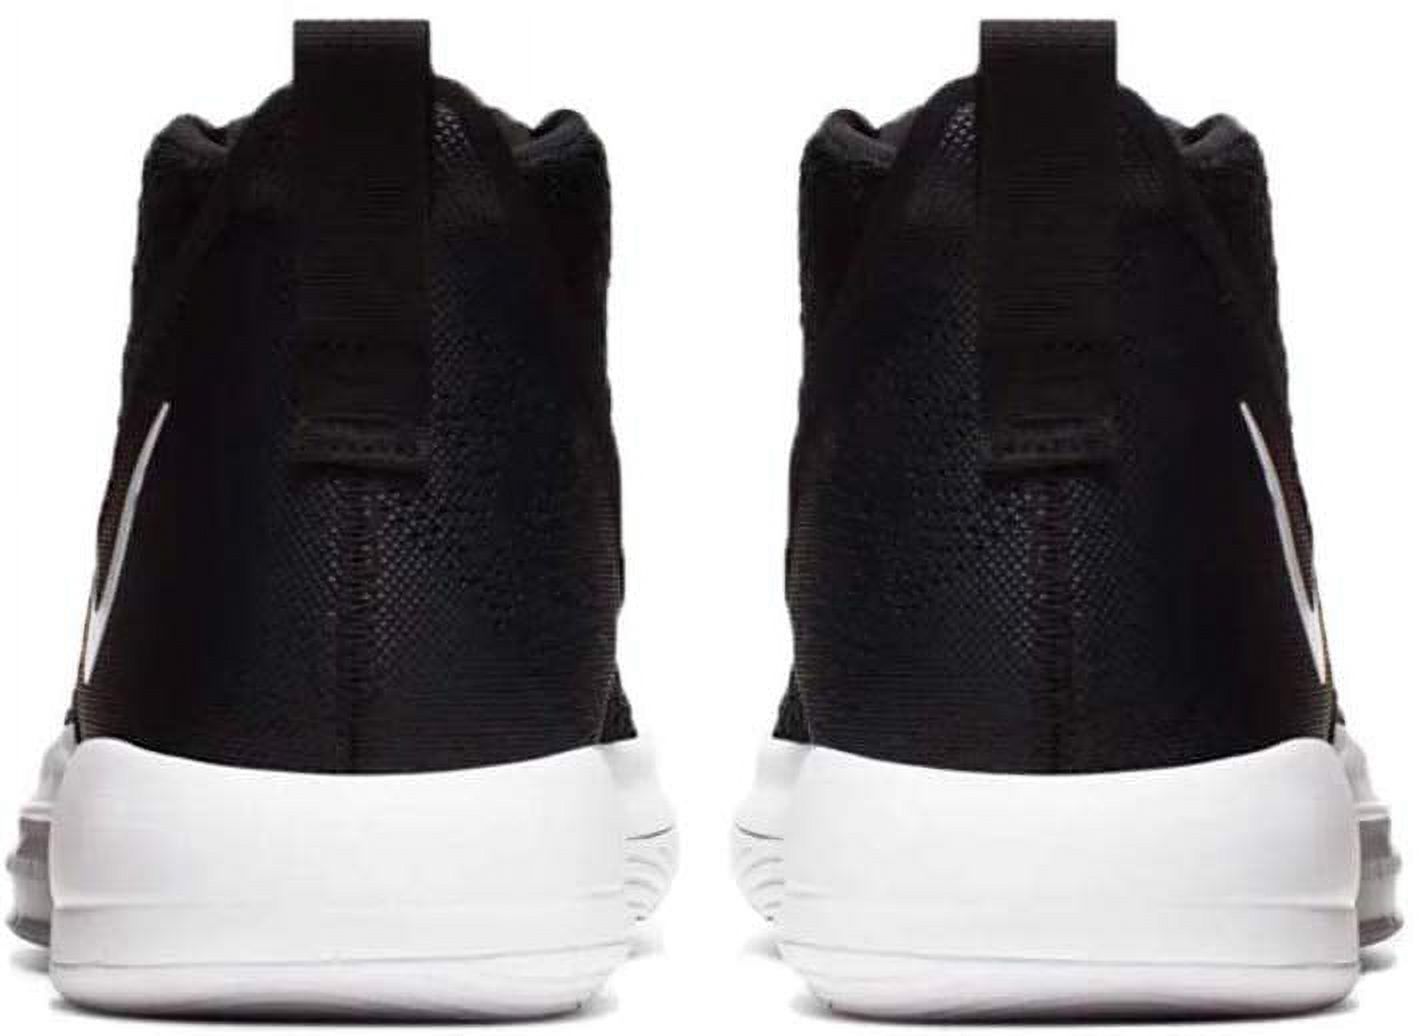 Nike Men's Zoom Rize TB Basketball Shoe, BQ5468-001 Black/White, 12 US - image 3 of 4